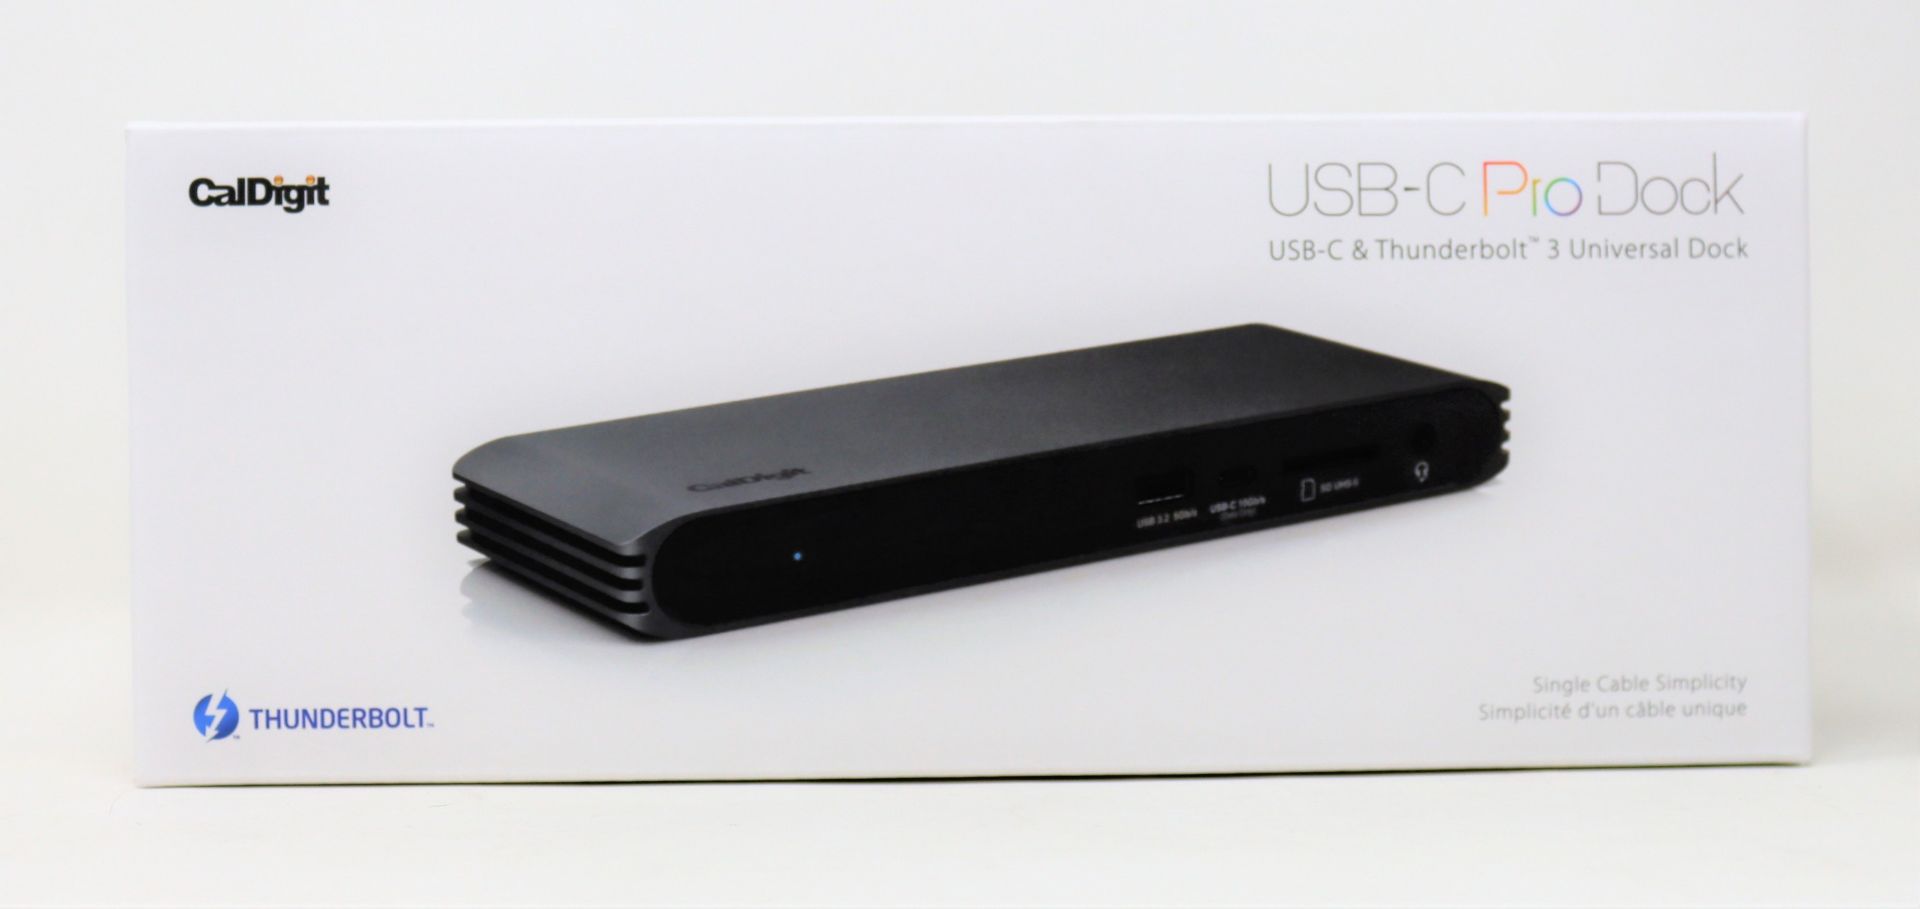 A boxed as new CalDigit USB-C Pro Dock USB-C & Thunderbolt 3 Universal Dock in Space Grey (EU07-SG-